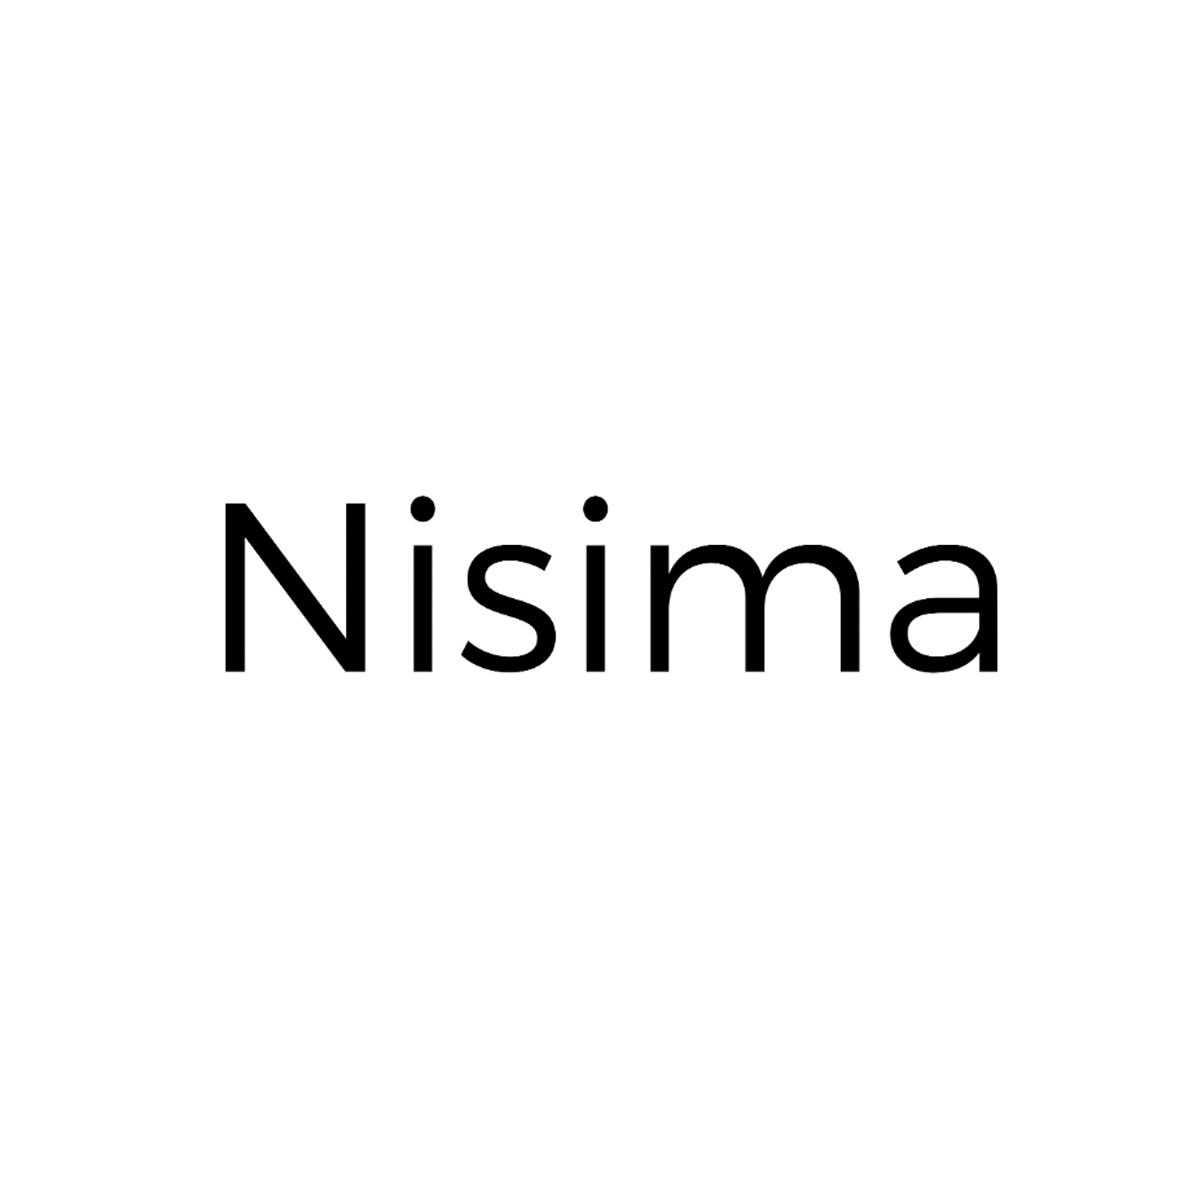 Nisima